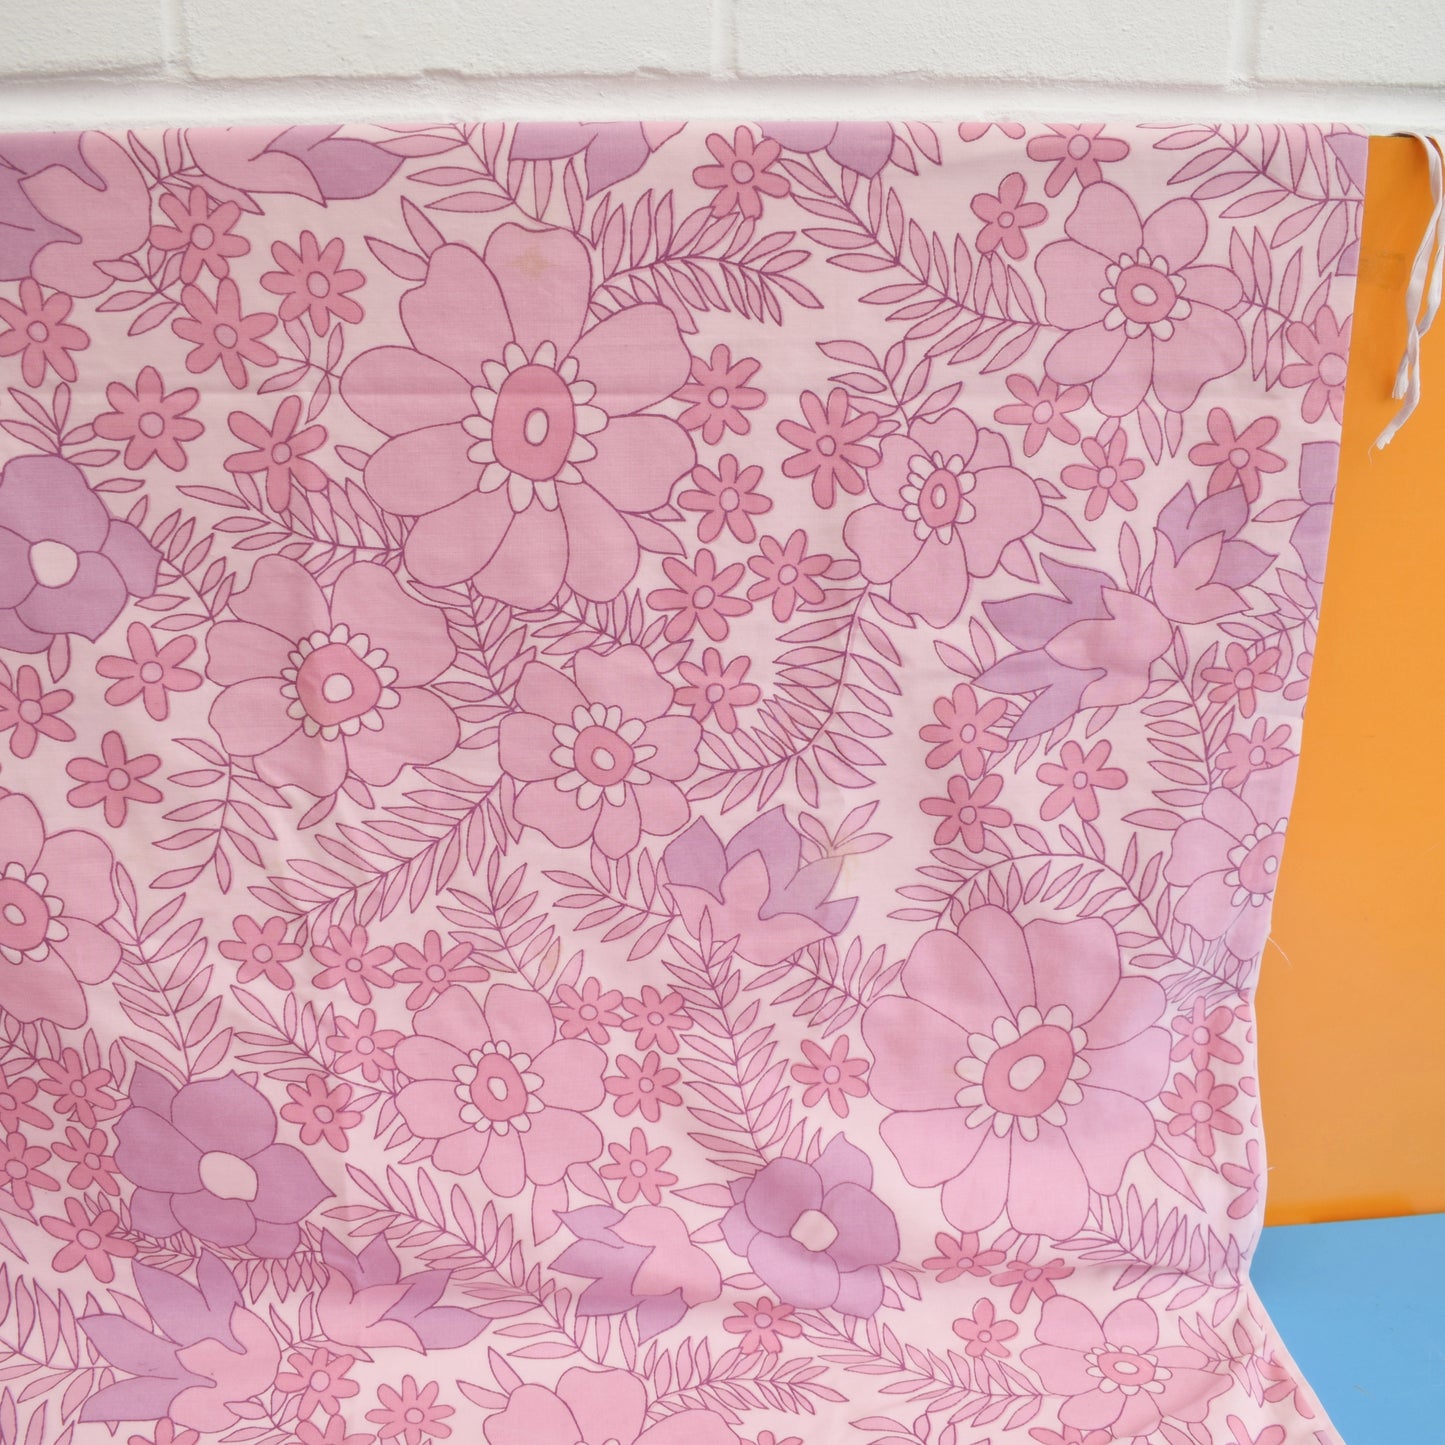 Vintage 1960s Duvet Cover / Fabric - Flower Power - Pink